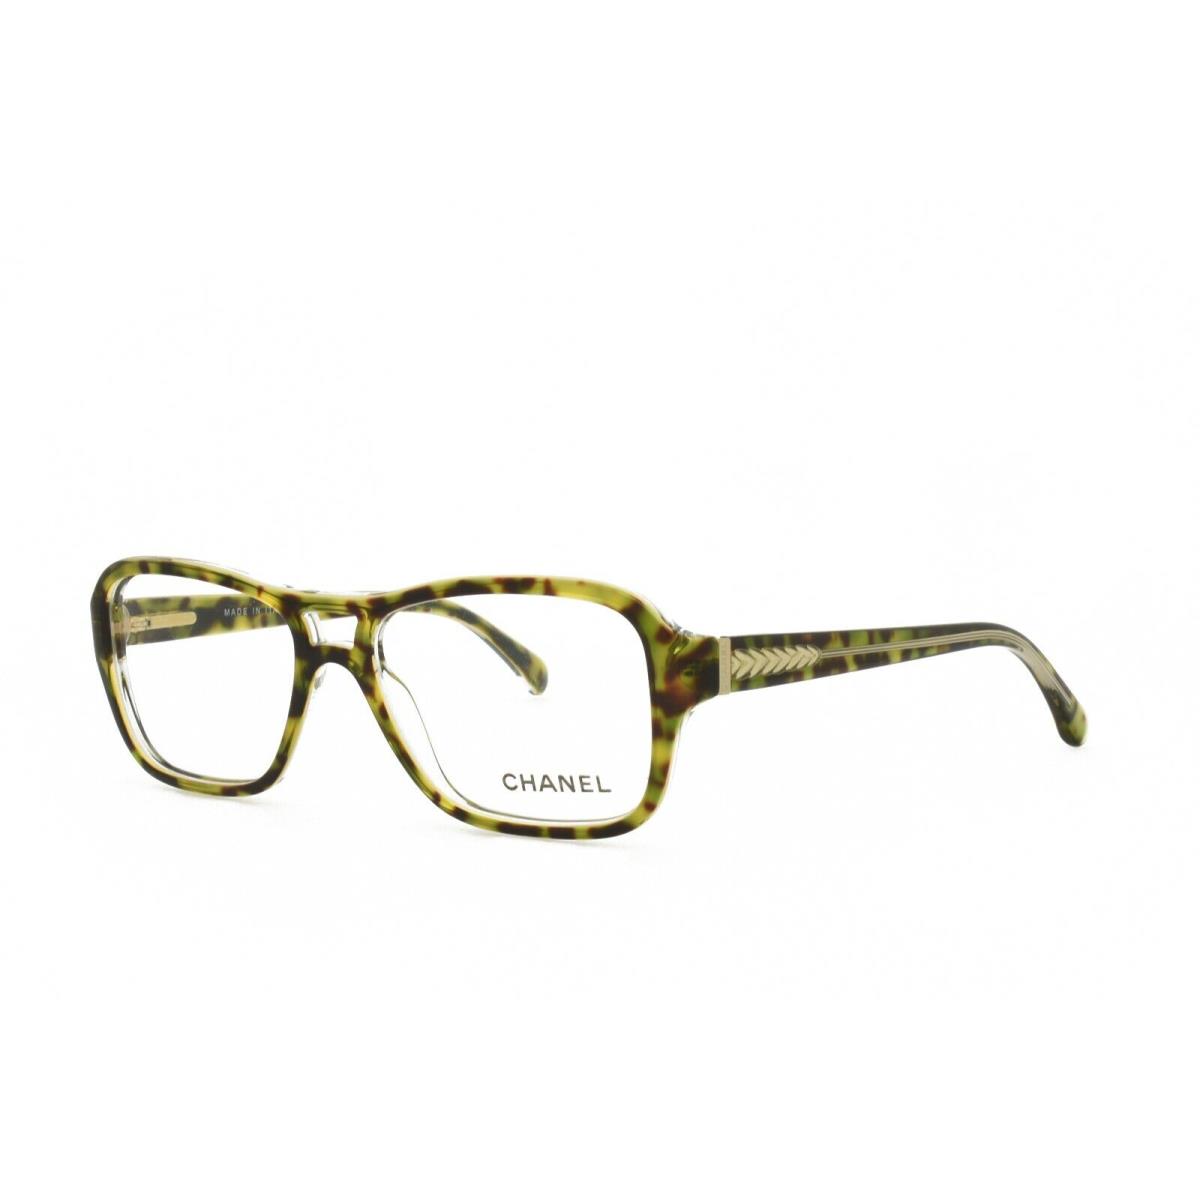 Chanel Eyeglasses Tortoise 3210 C.763 52 -16-135